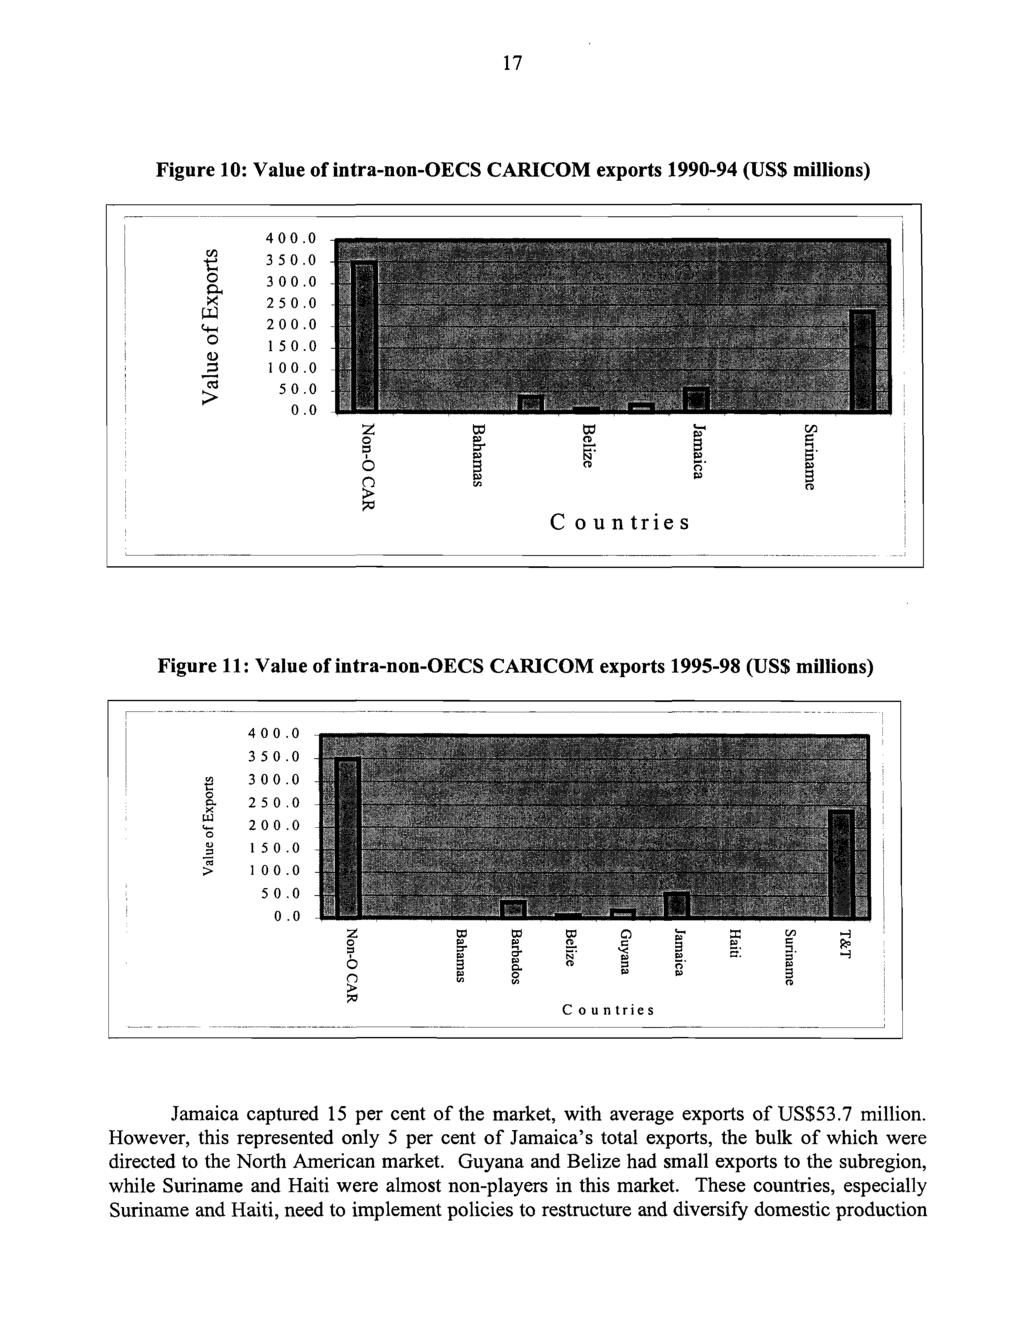 17 Figure 10: Value of intra-non-oecs CARICOM exports 1990-94 (US$ millions) Figure 11: Value of intra-non-oecs CARICOM exports 1995-98 (US$ millions) OCl X W CO ÊL J H. 00 ao CO M oc X os 3.